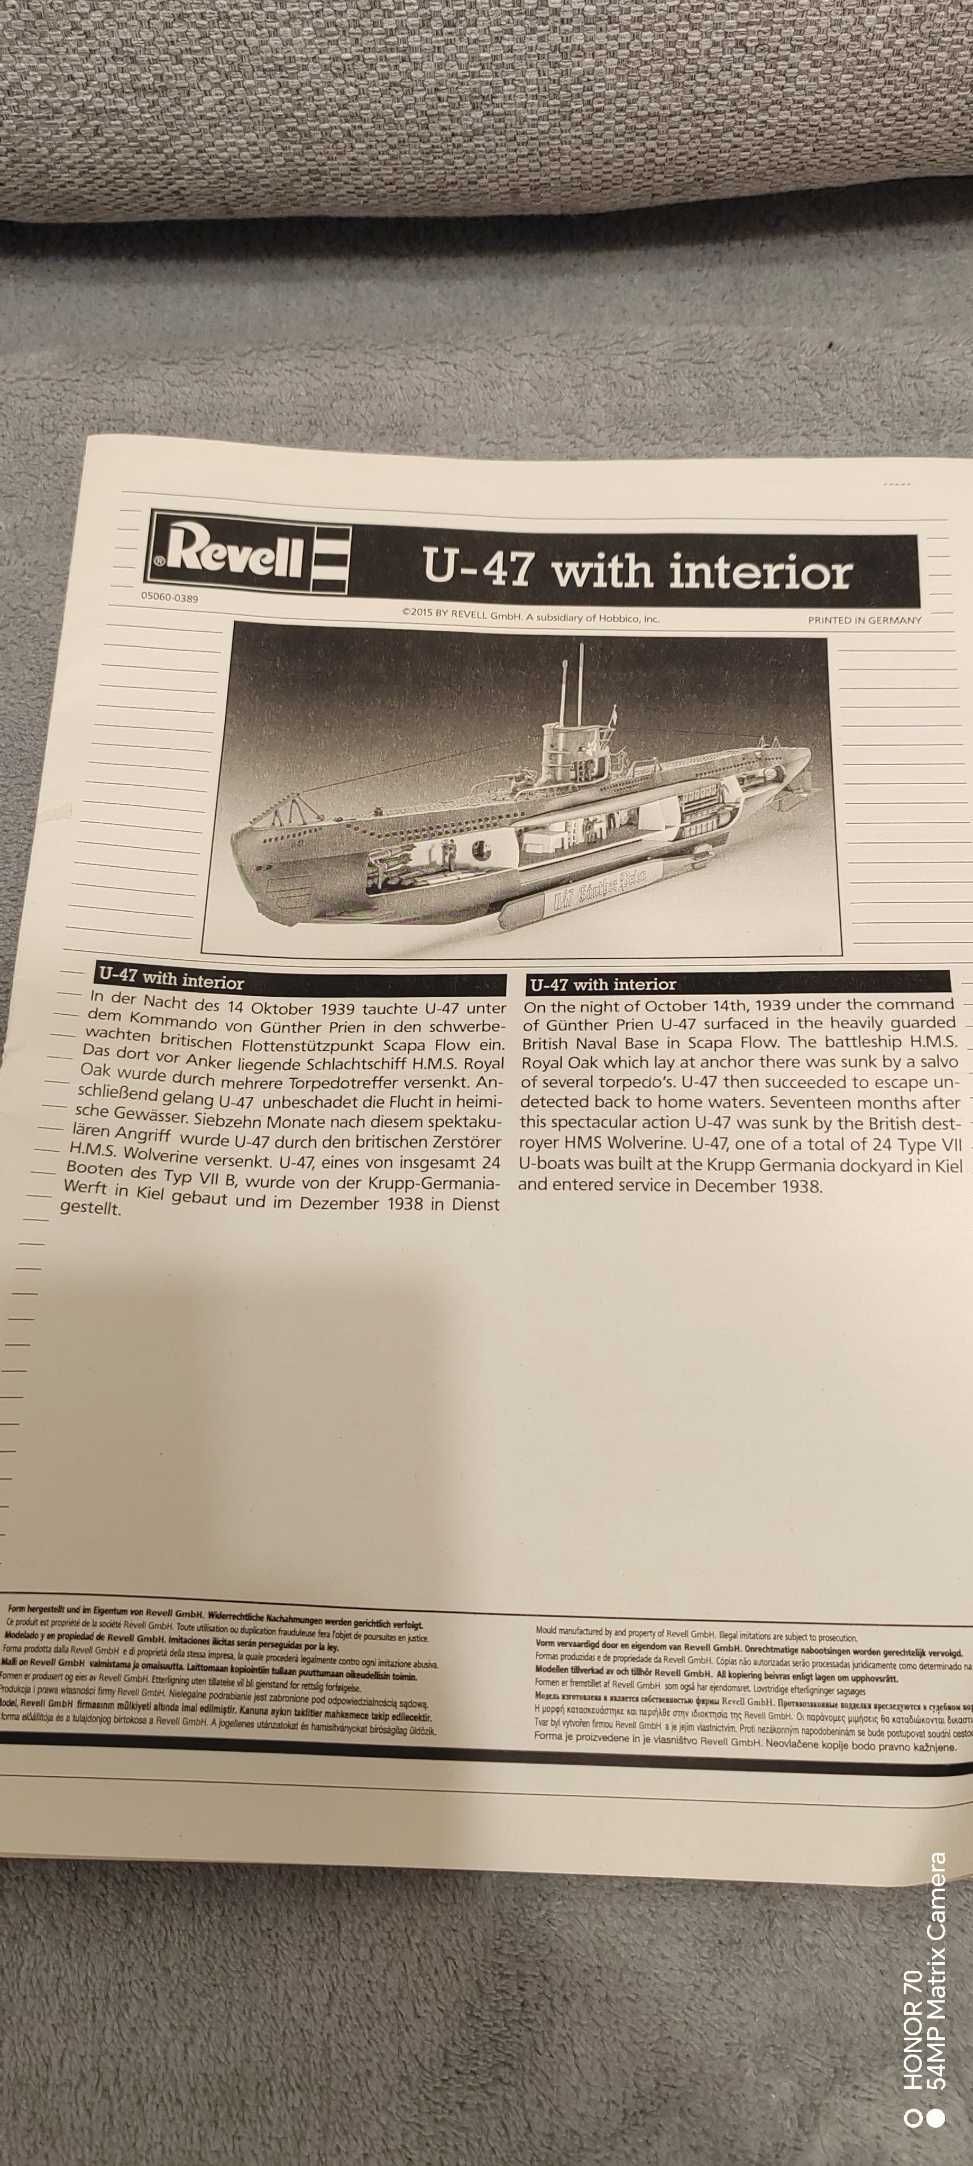 Revell  model okrętu podwodnego U-boot U 47 with interior skala 1:125